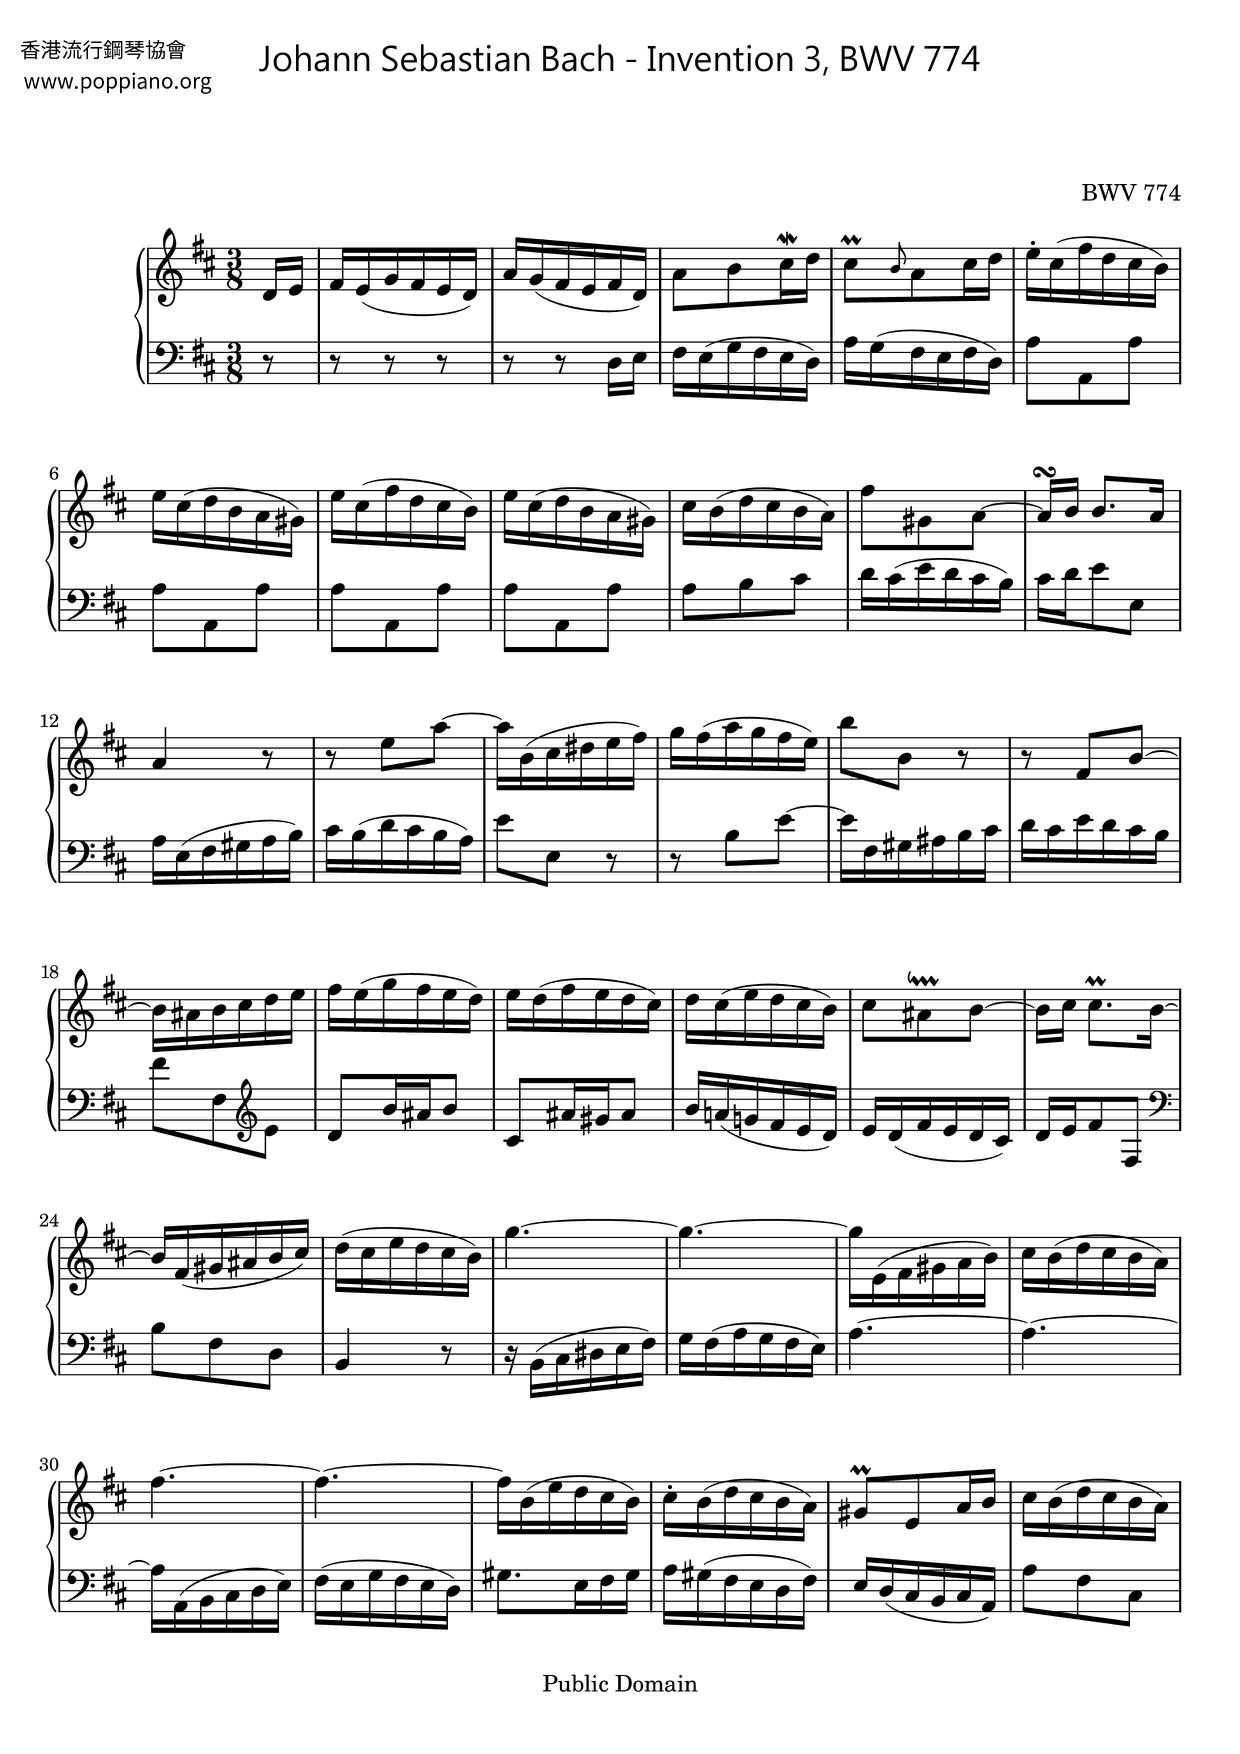 Invention 3, BWV 774 Score